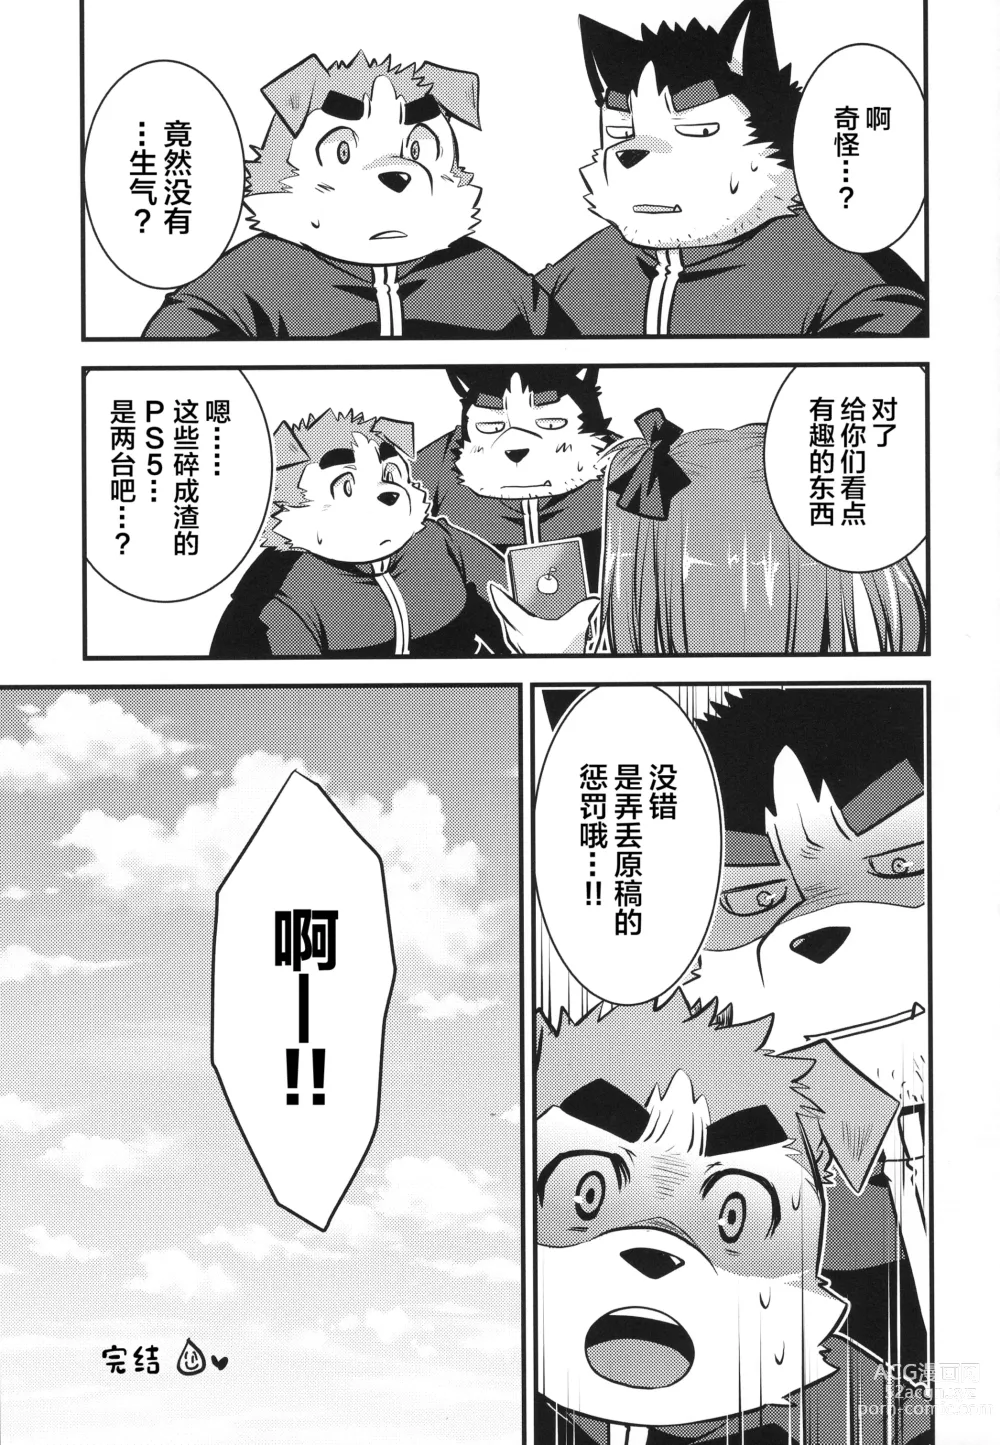 Page 25 of doujinshi Eccentric Shintai Kensa